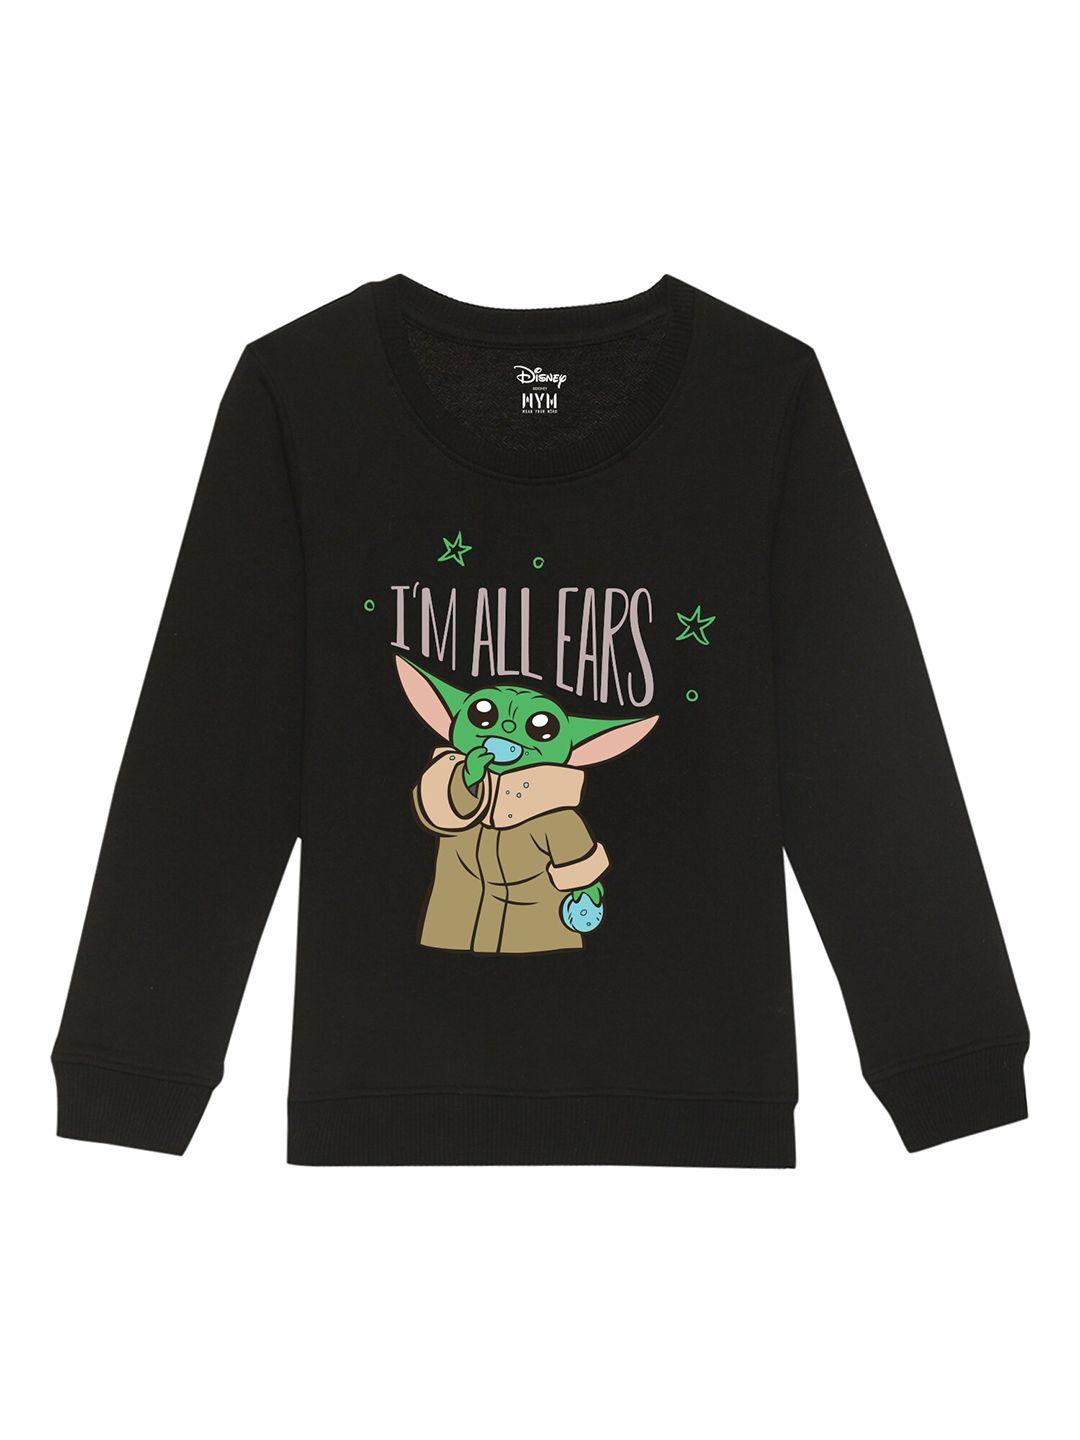 star wars by wear your mind kids unisex black printed sweatshirt